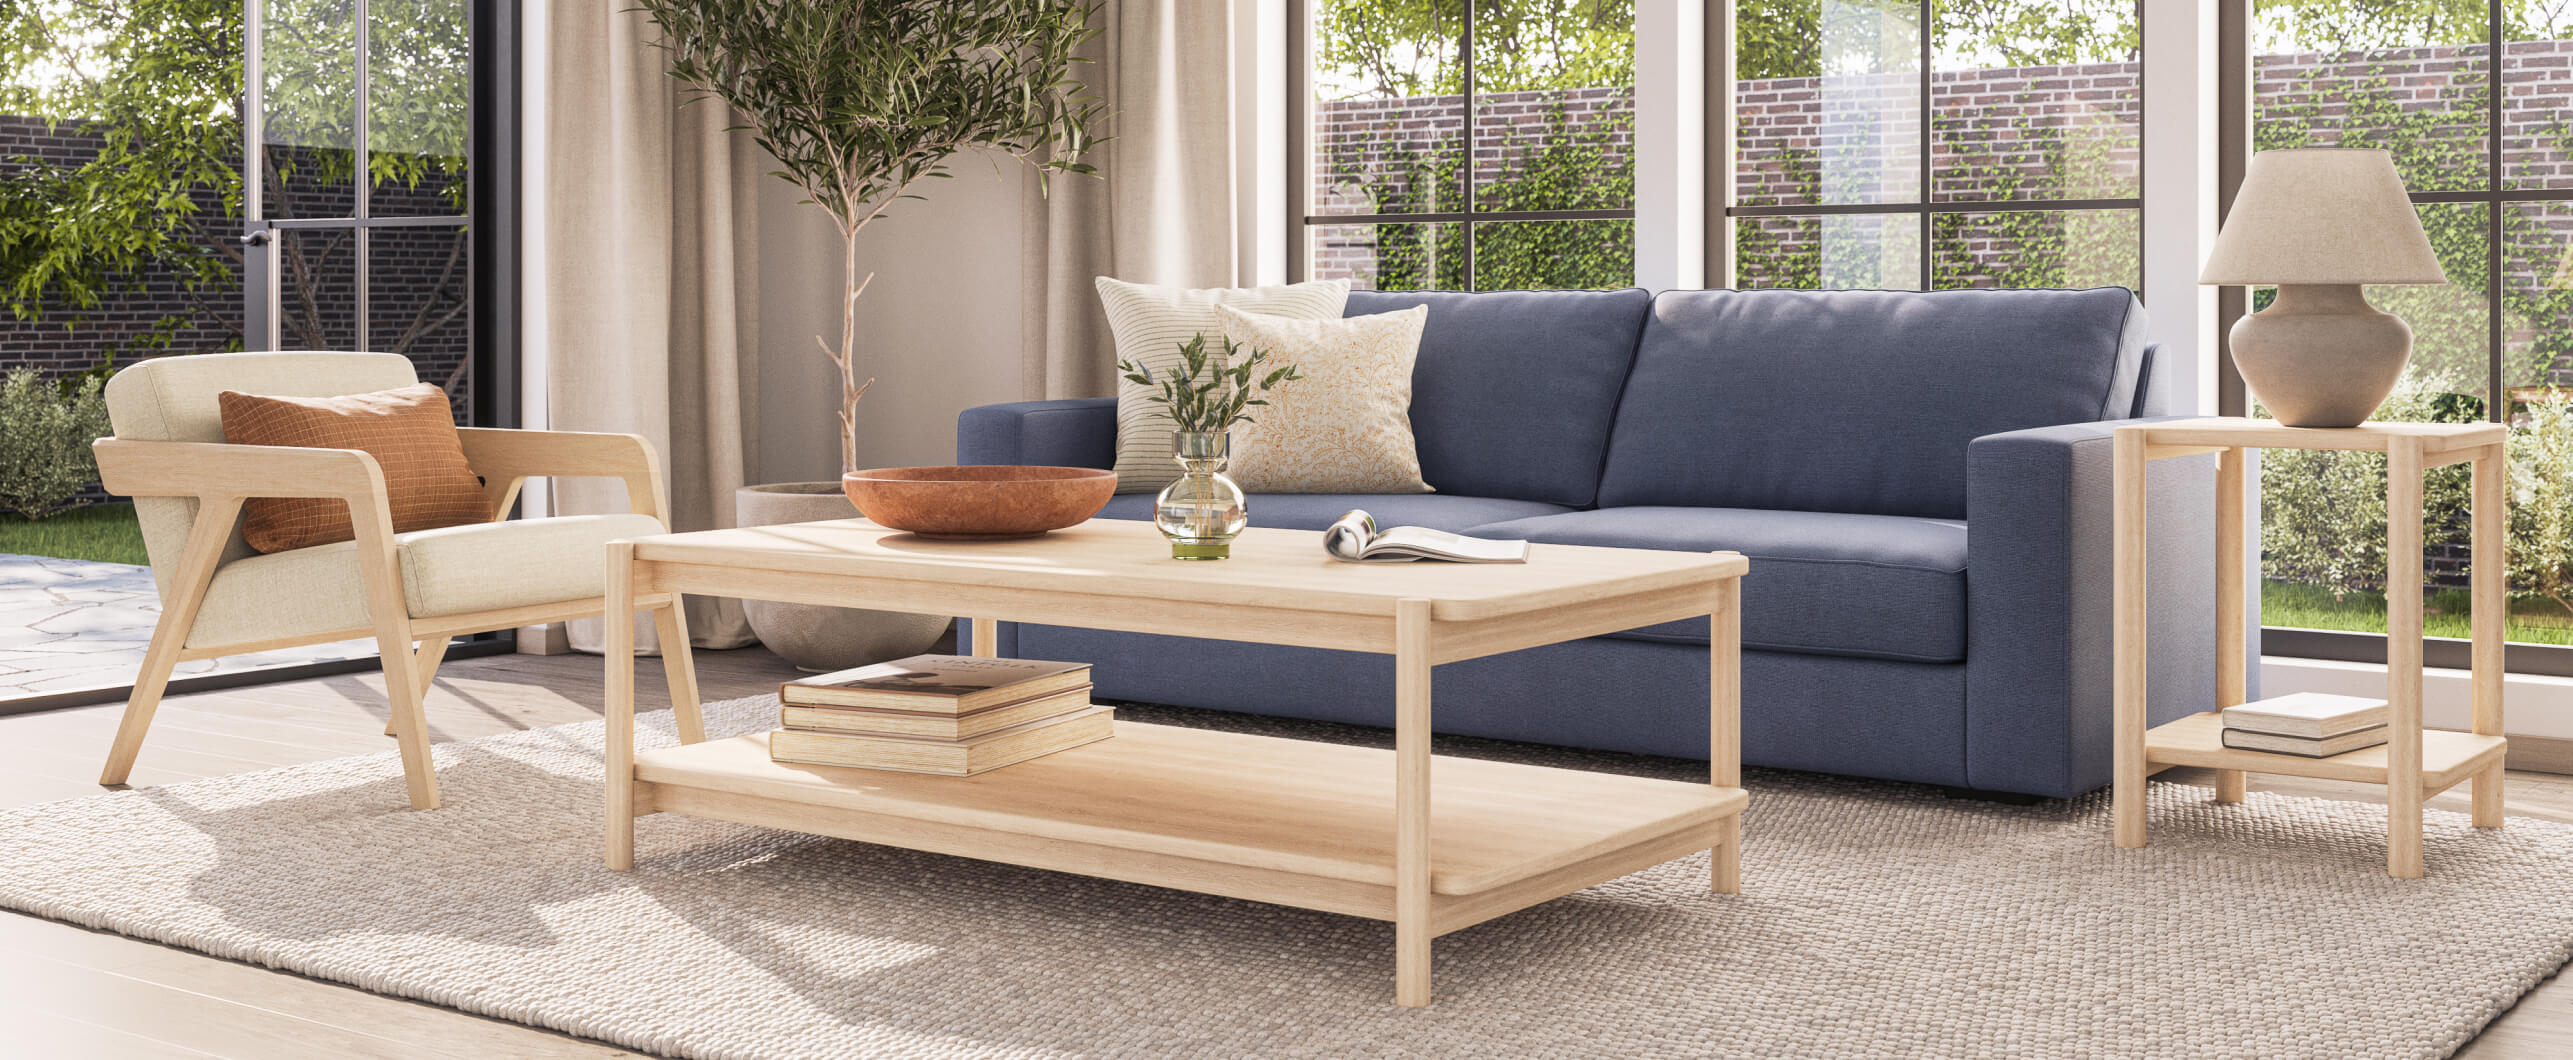 Blue Rio Sofa with maple furniture